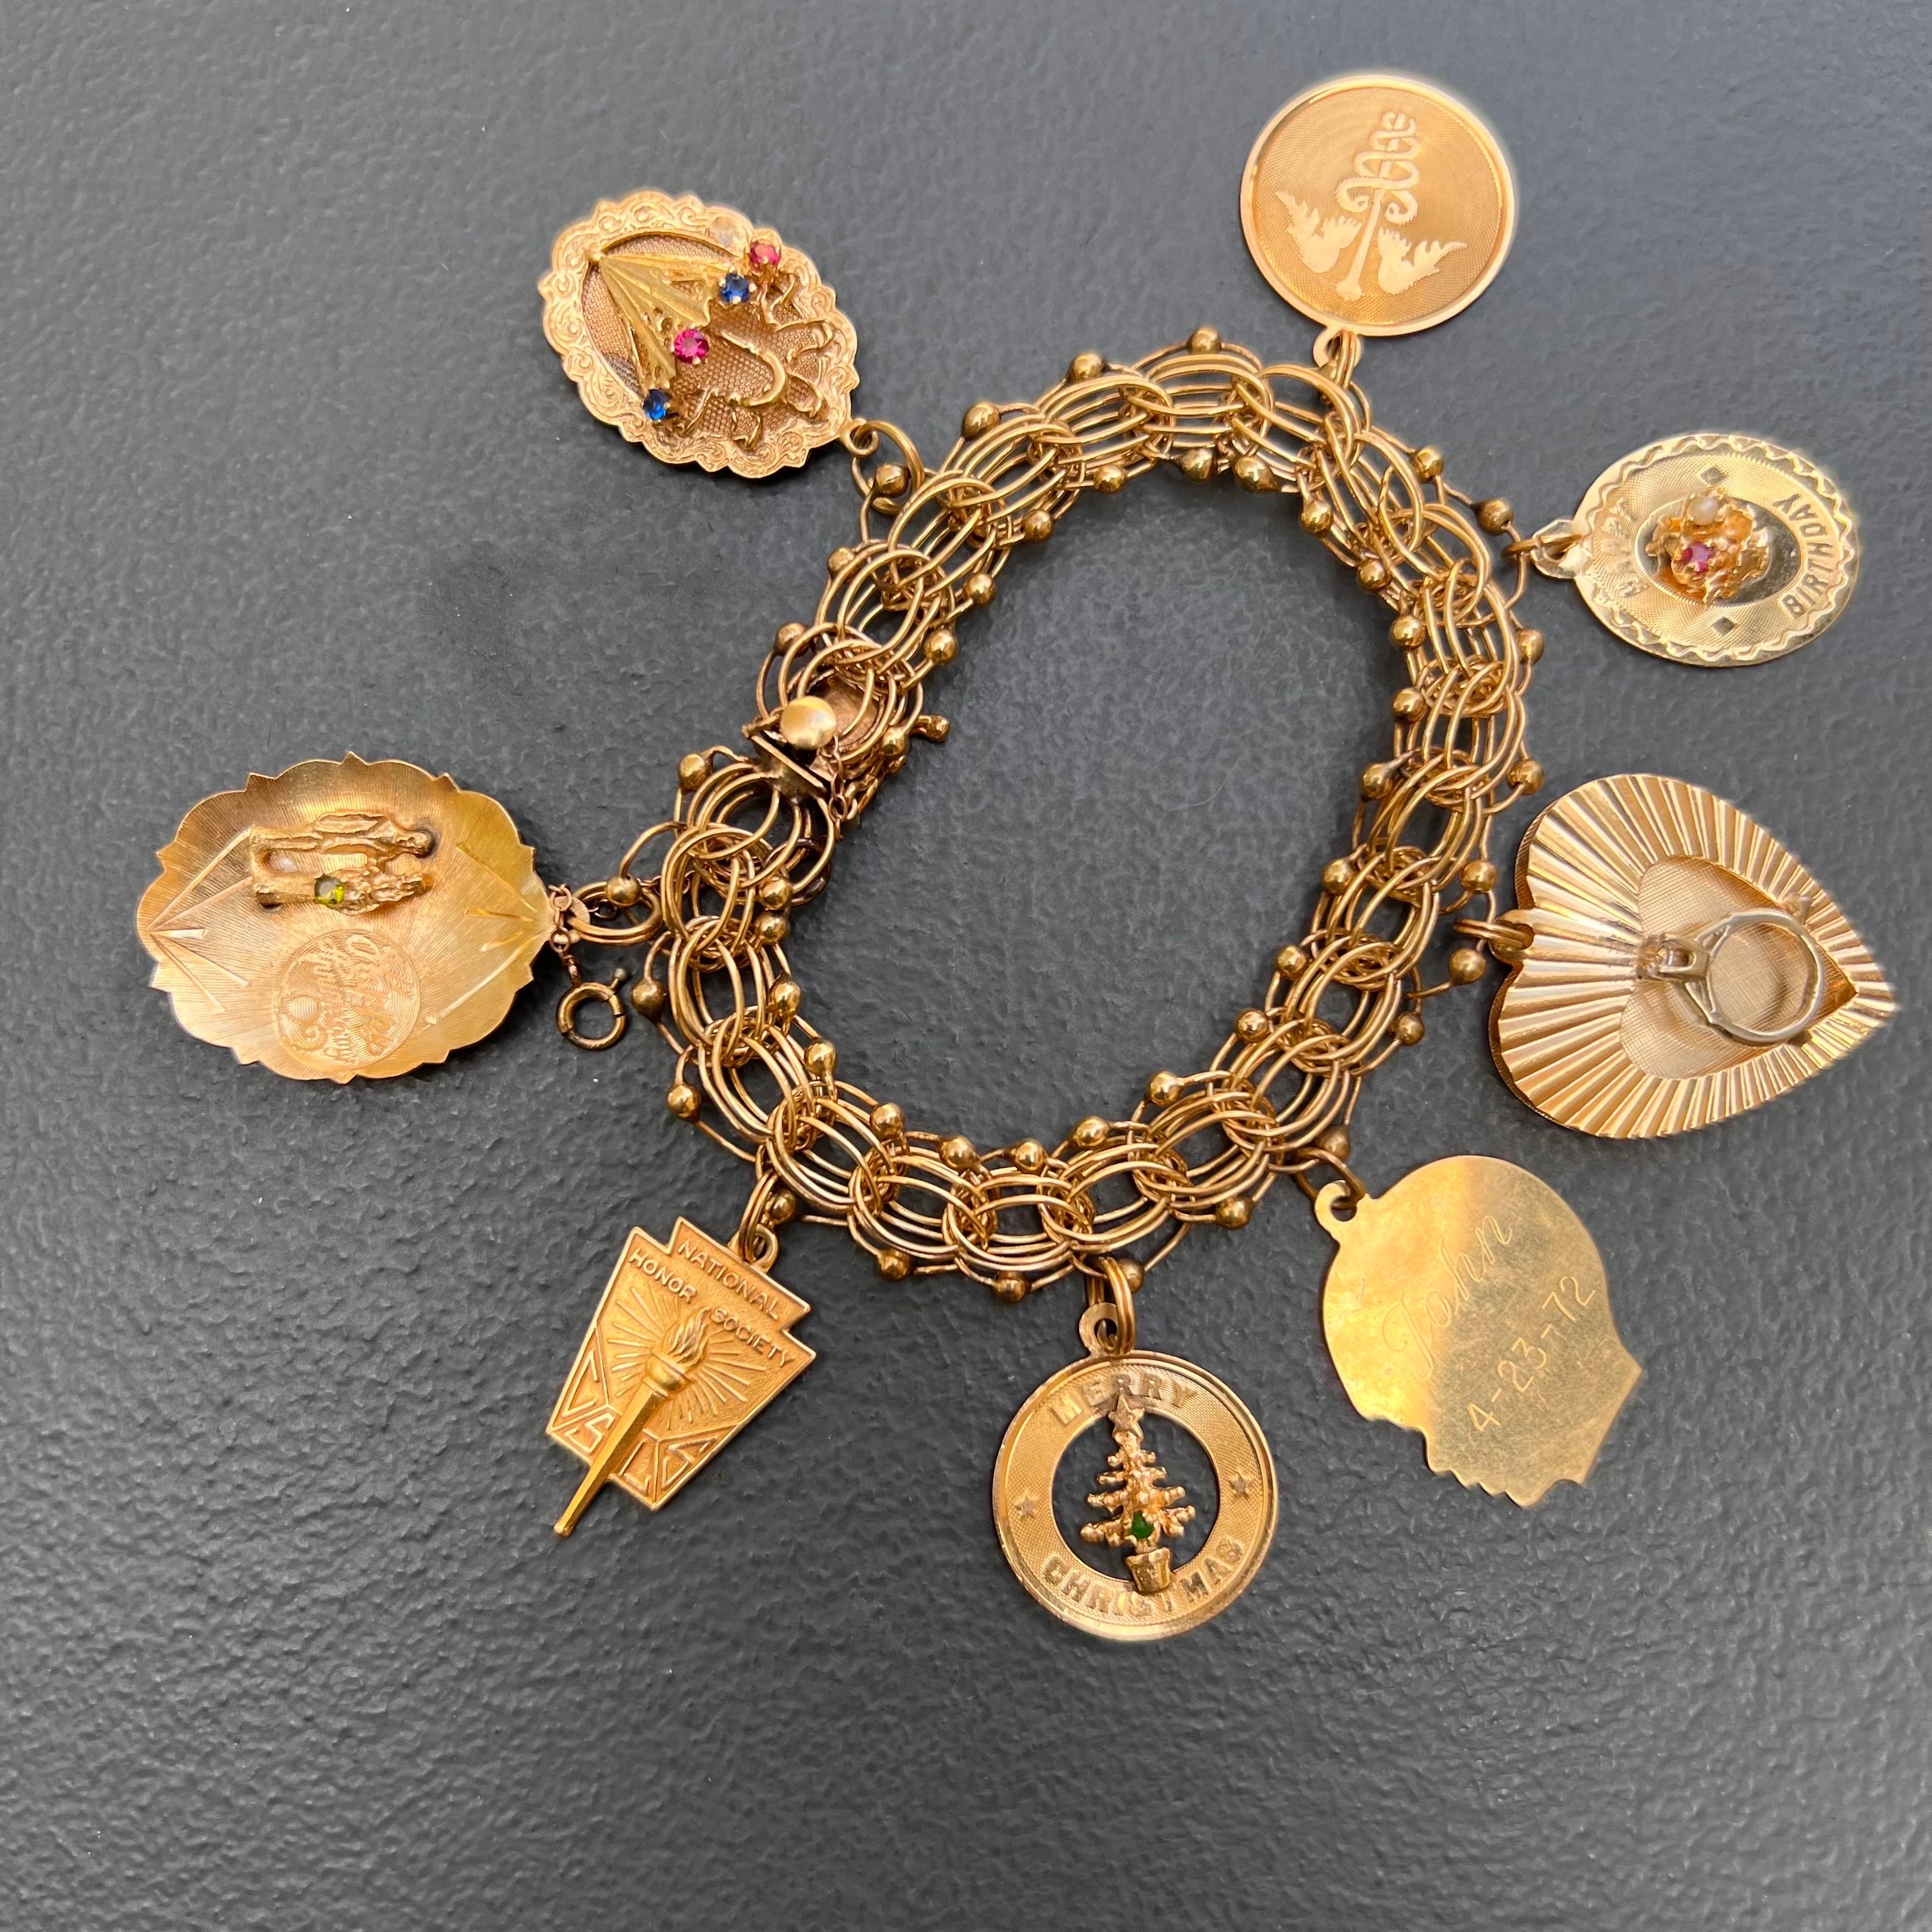 1960's gold charm bracelet